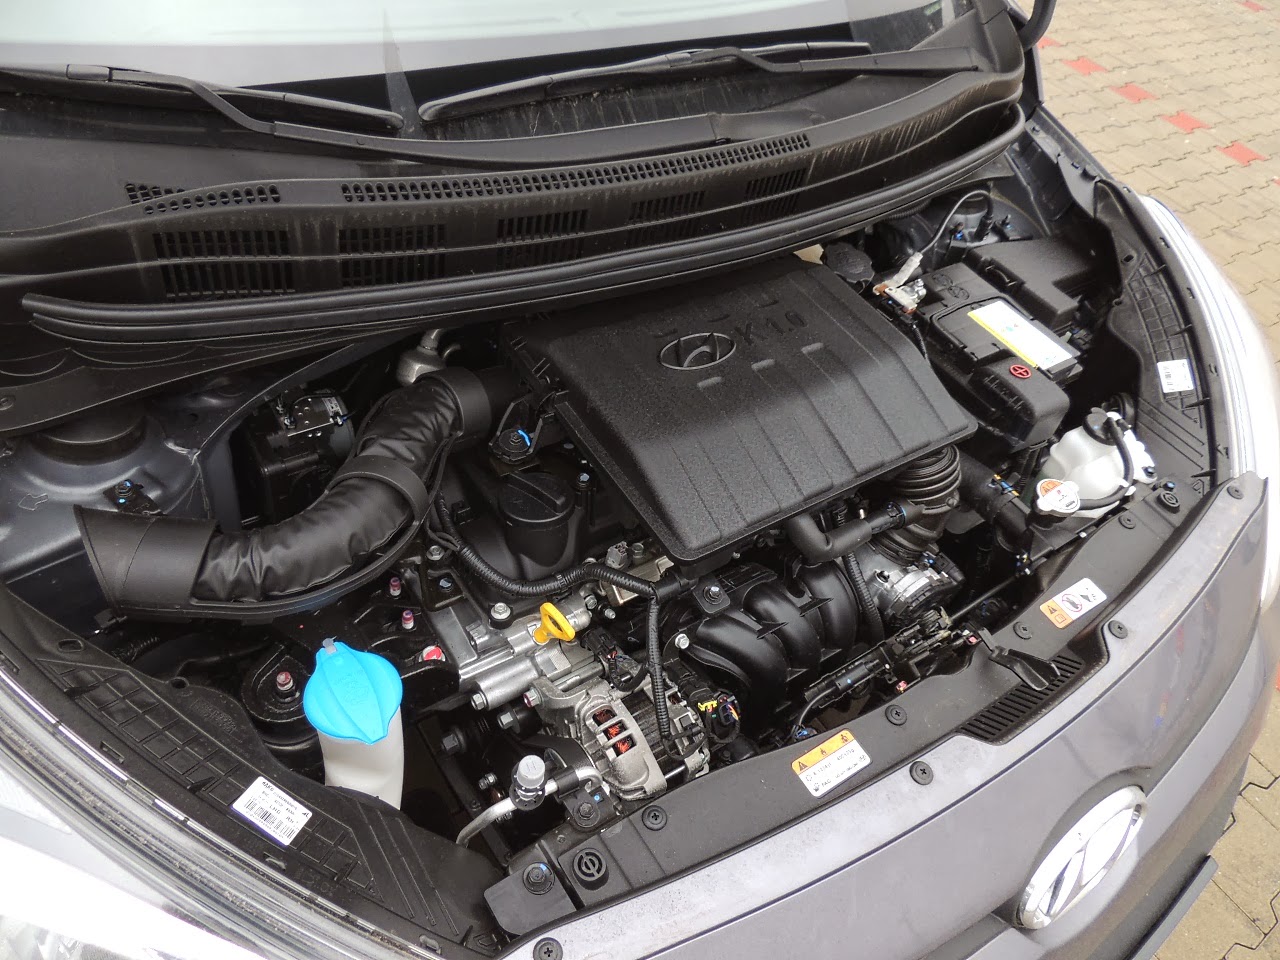 V8 Supercharged Test Drive! Pt. 38 Miejski spryciarz